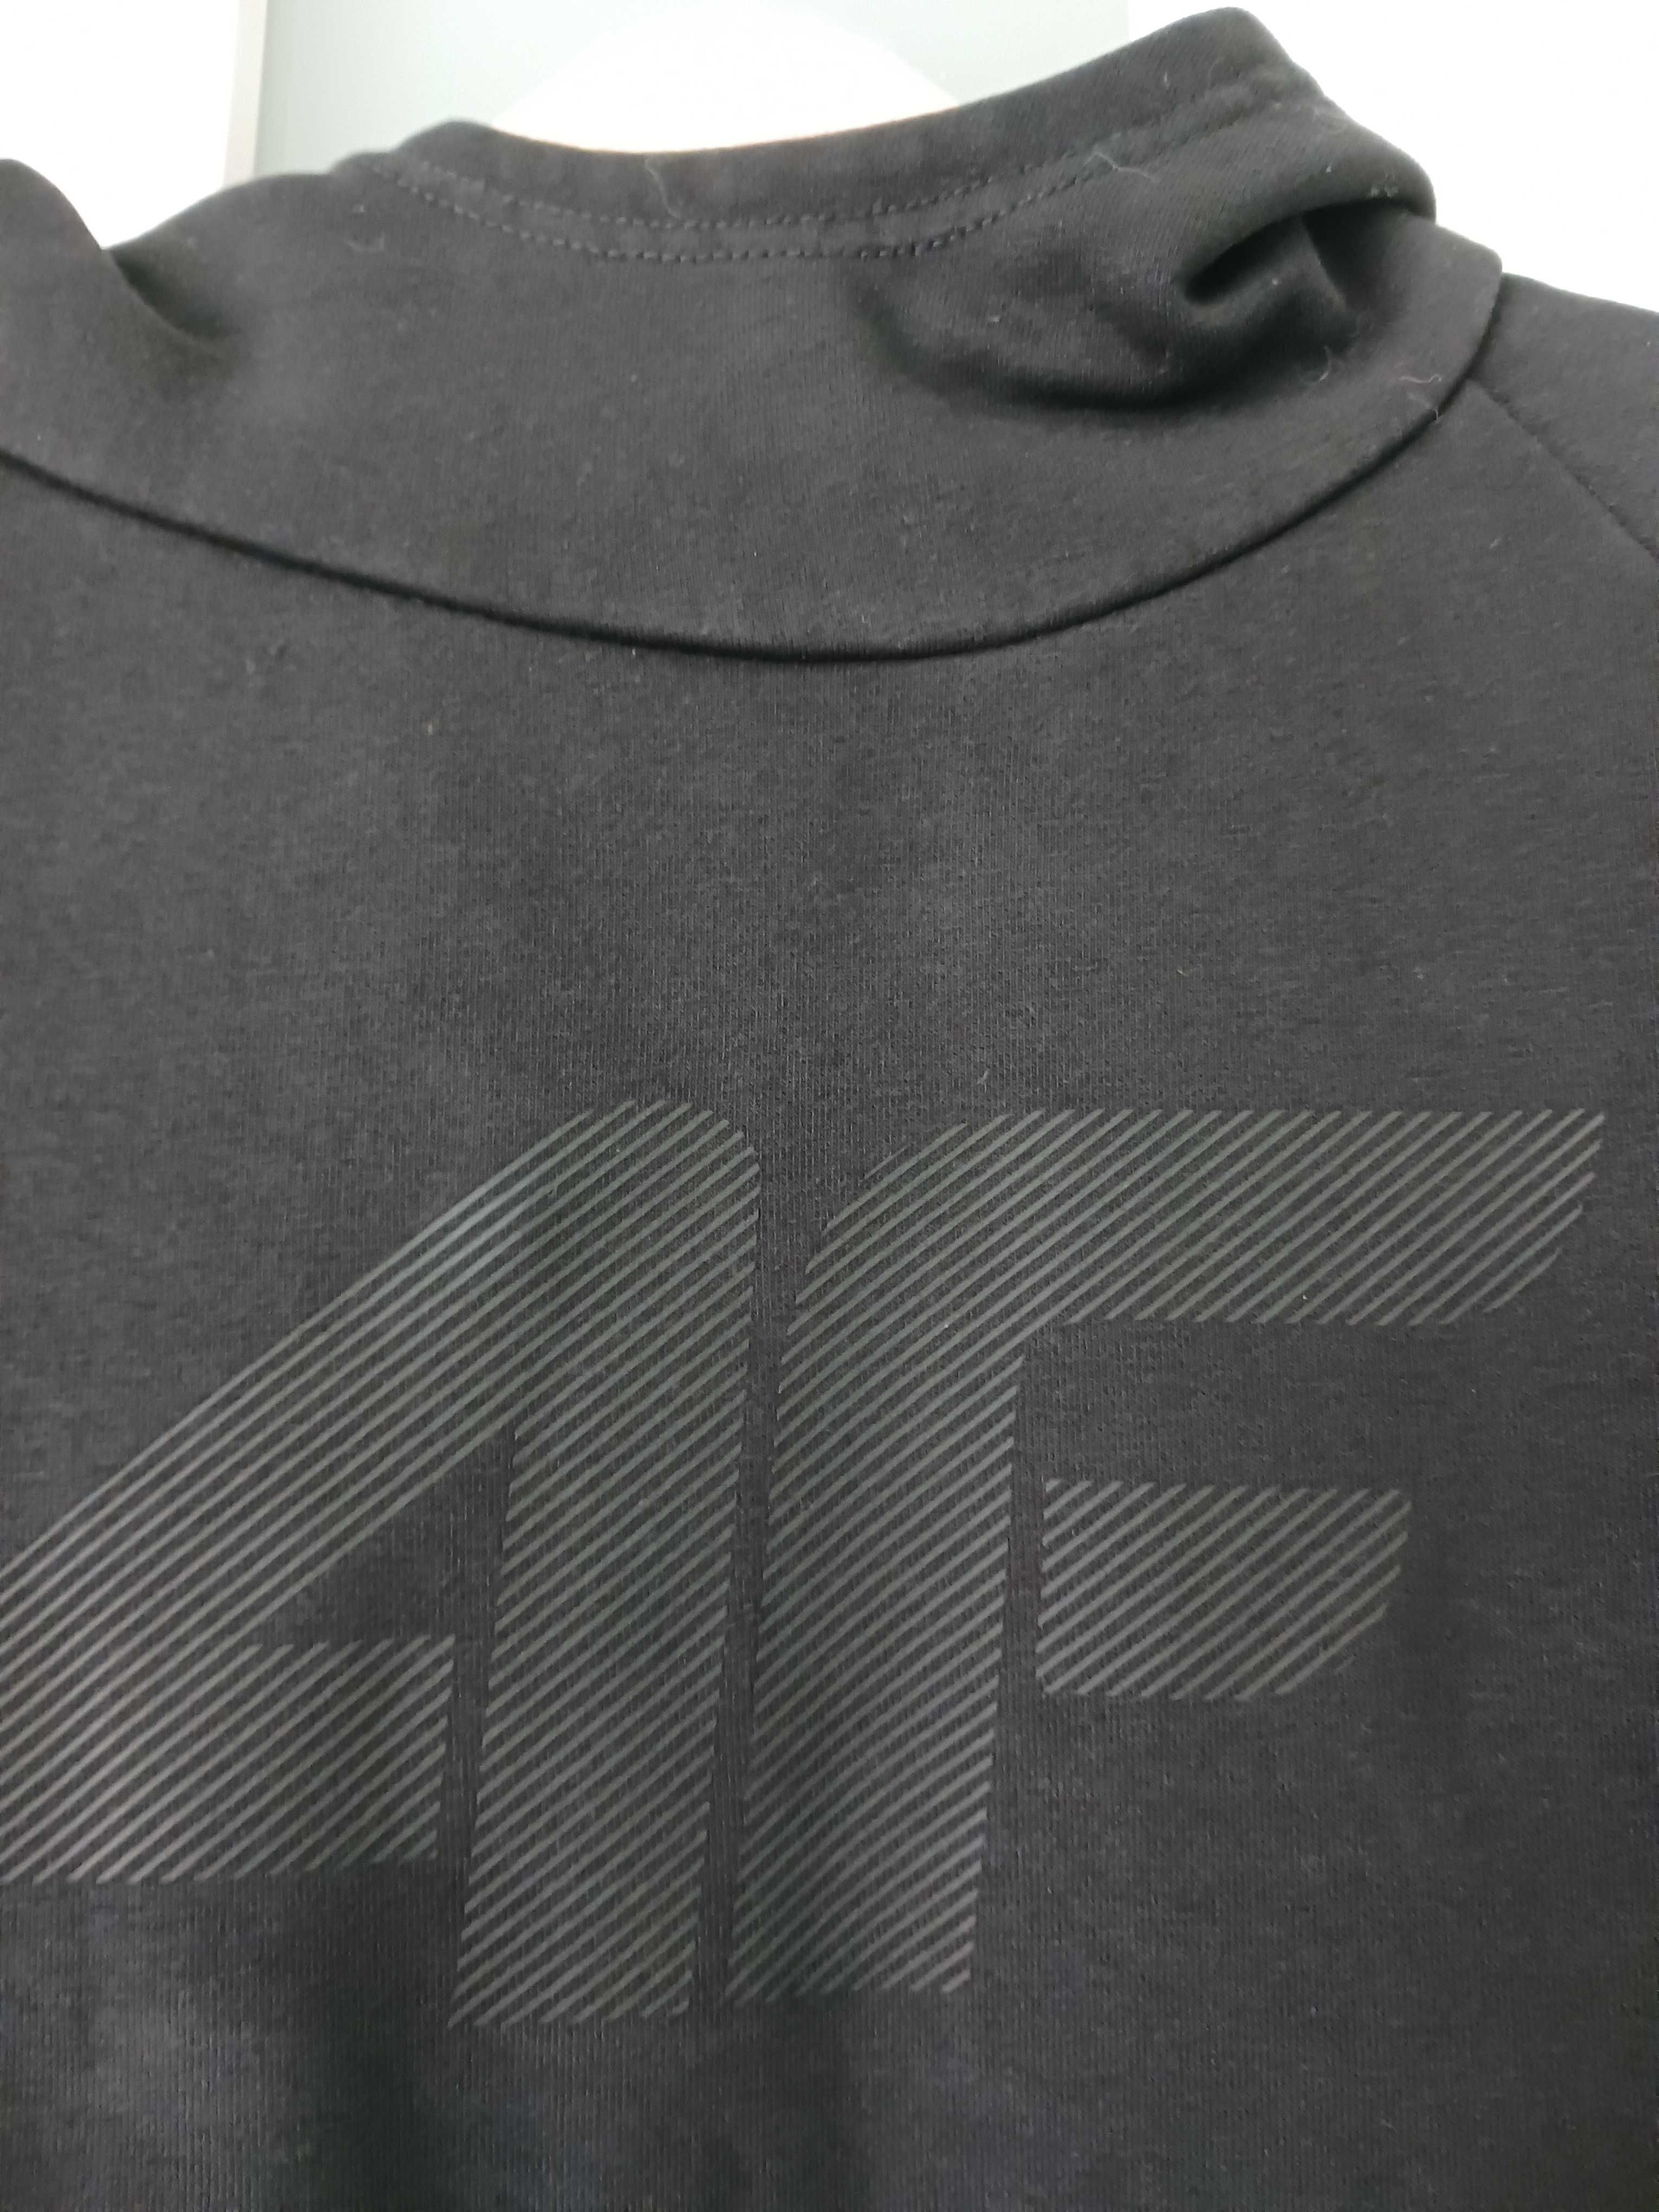 Bluza czarna z kapturem 4F r. 152